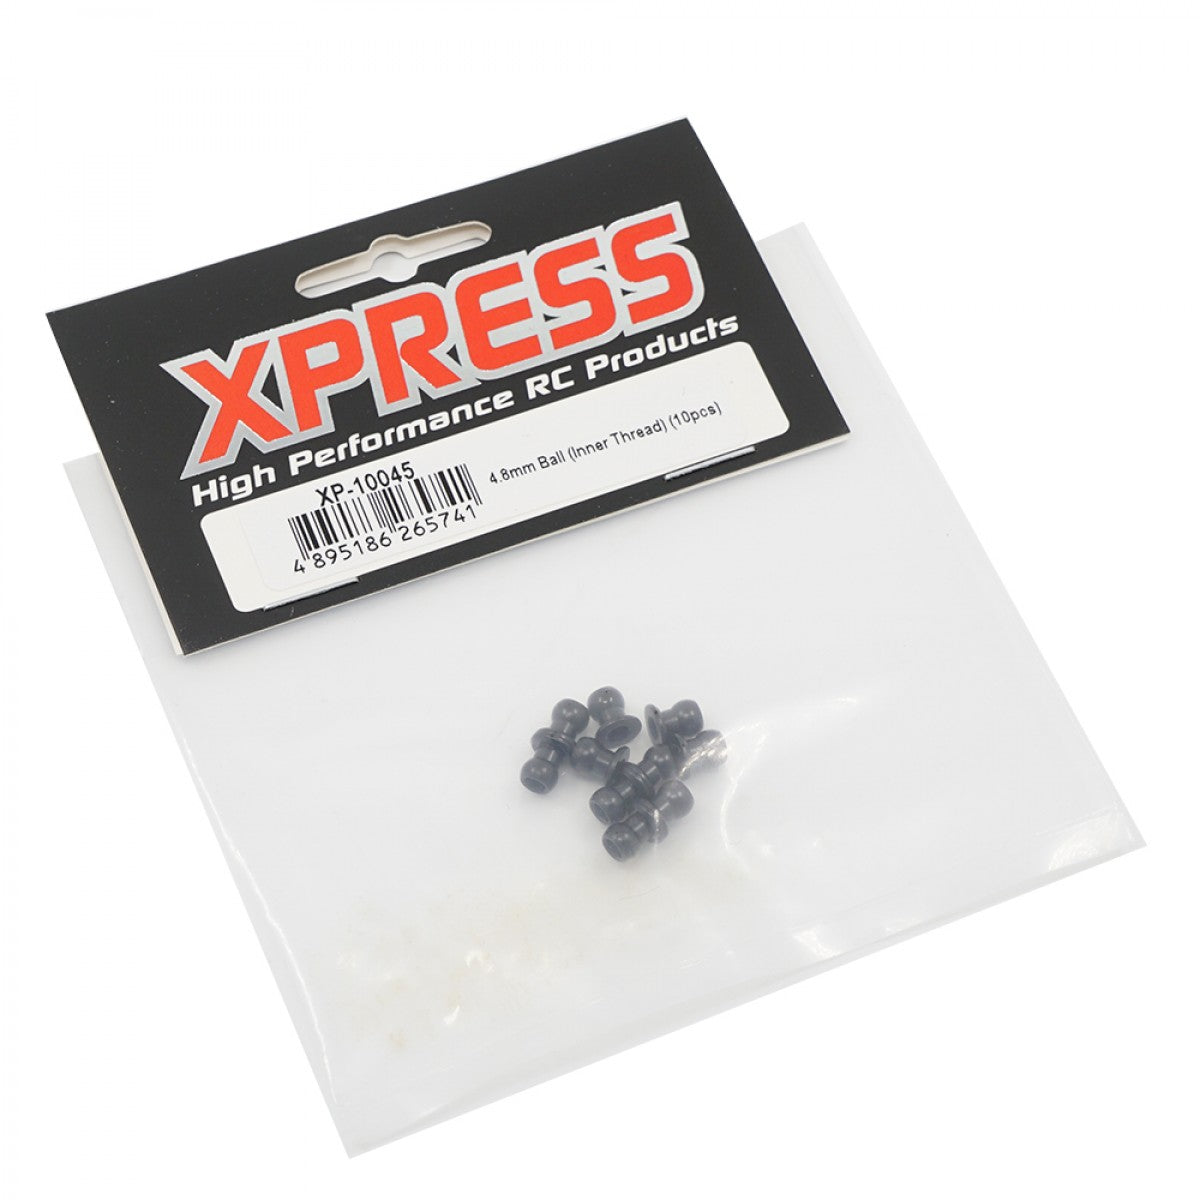 Xpress XP-10045 4.8mm Ball Inner Thread 10pcs for XQ1S XM1S